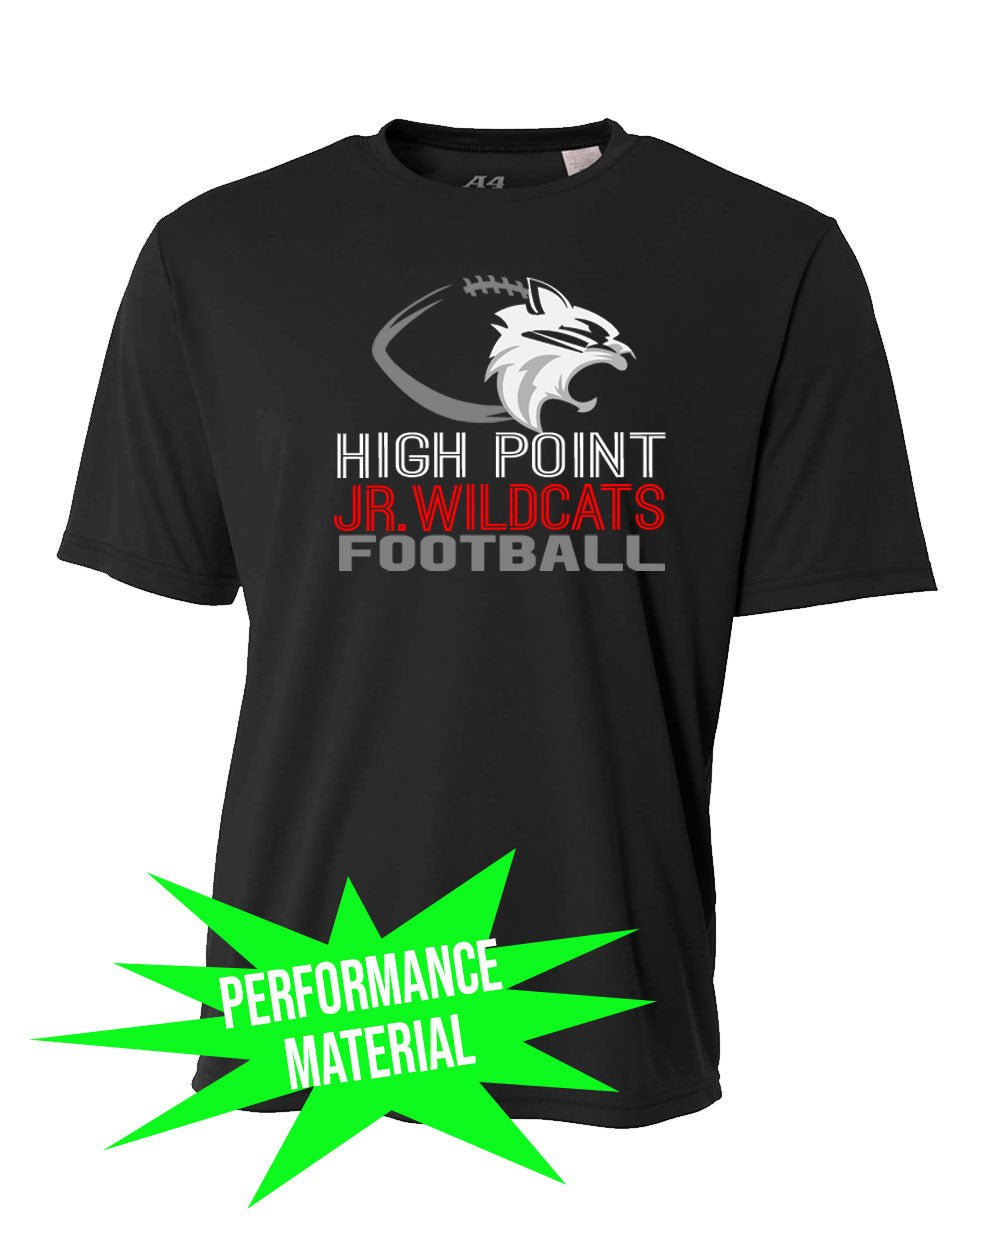 High Point Football Performance Material design 1 T-Shirt